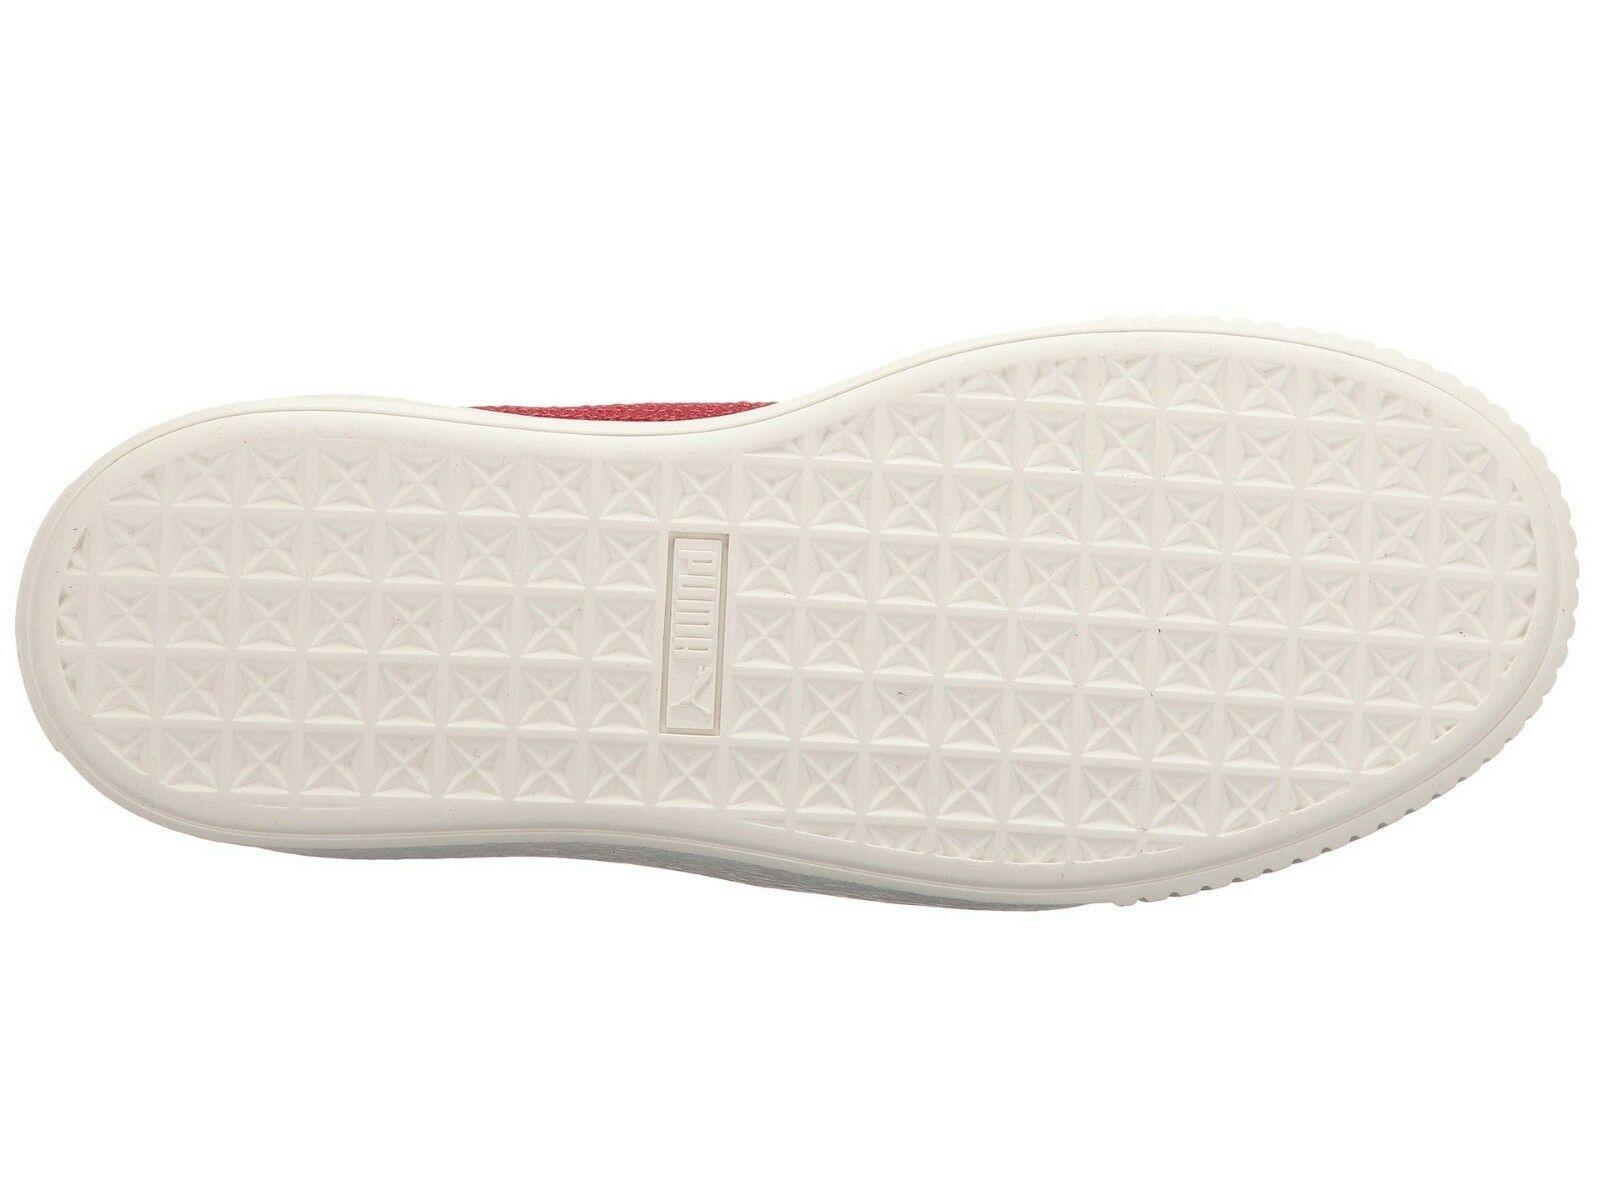 PUMA Women's Platform Lux Wn Sneaker Color Toreador Red Size US 8 - SVNYFancy